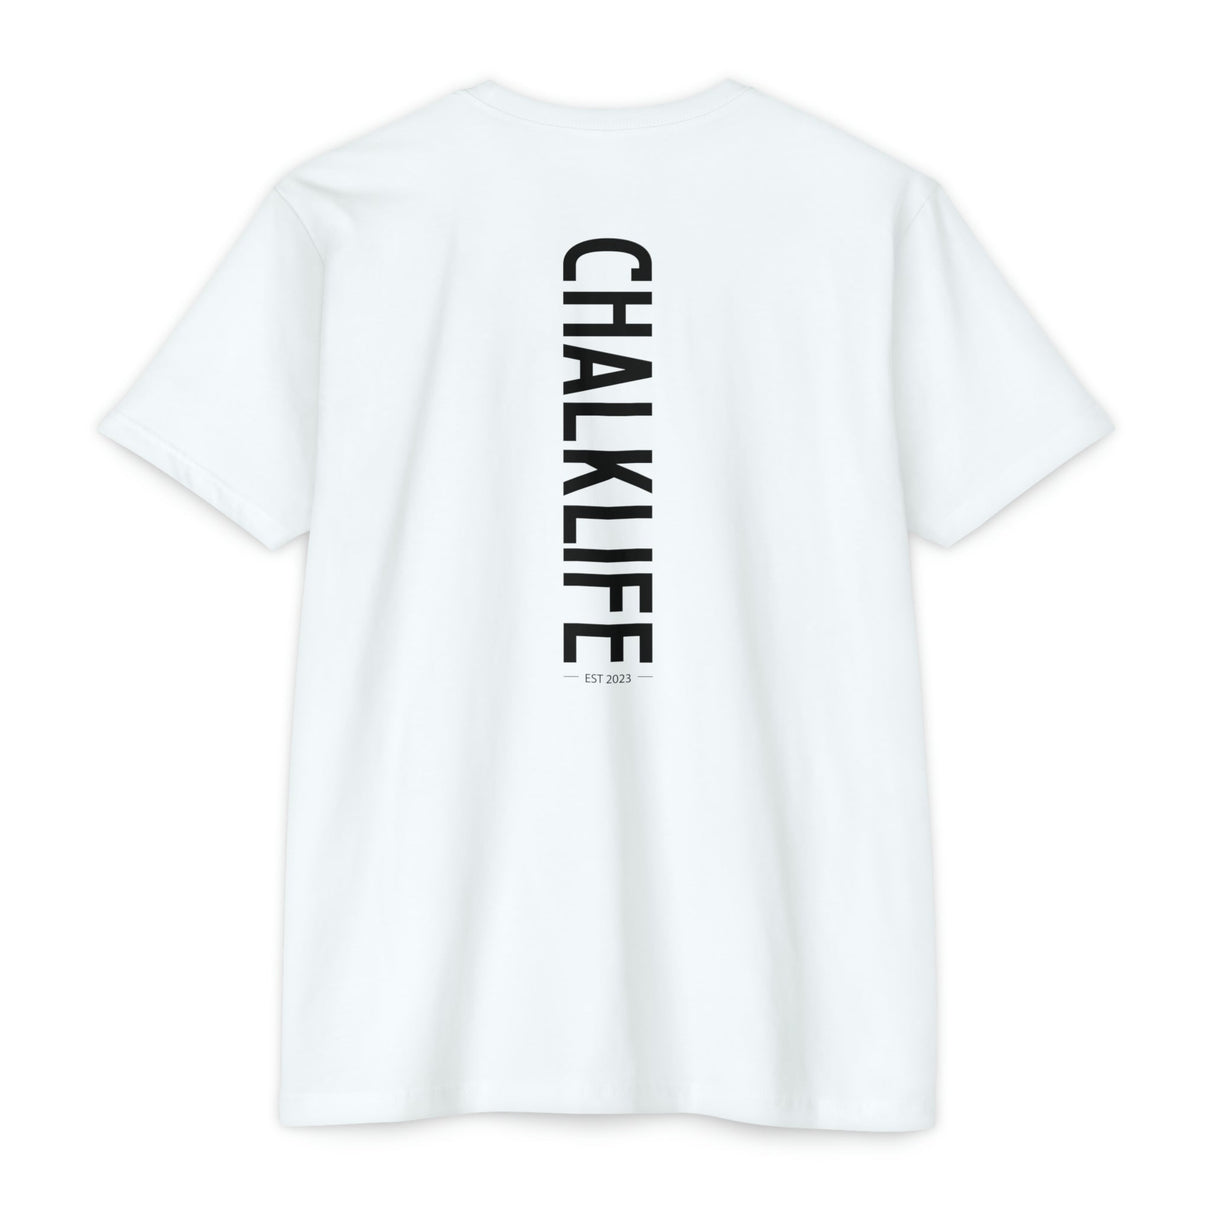 Chalklife Ultimate Rock Climber's T-Shirt - Chalklife, LLC